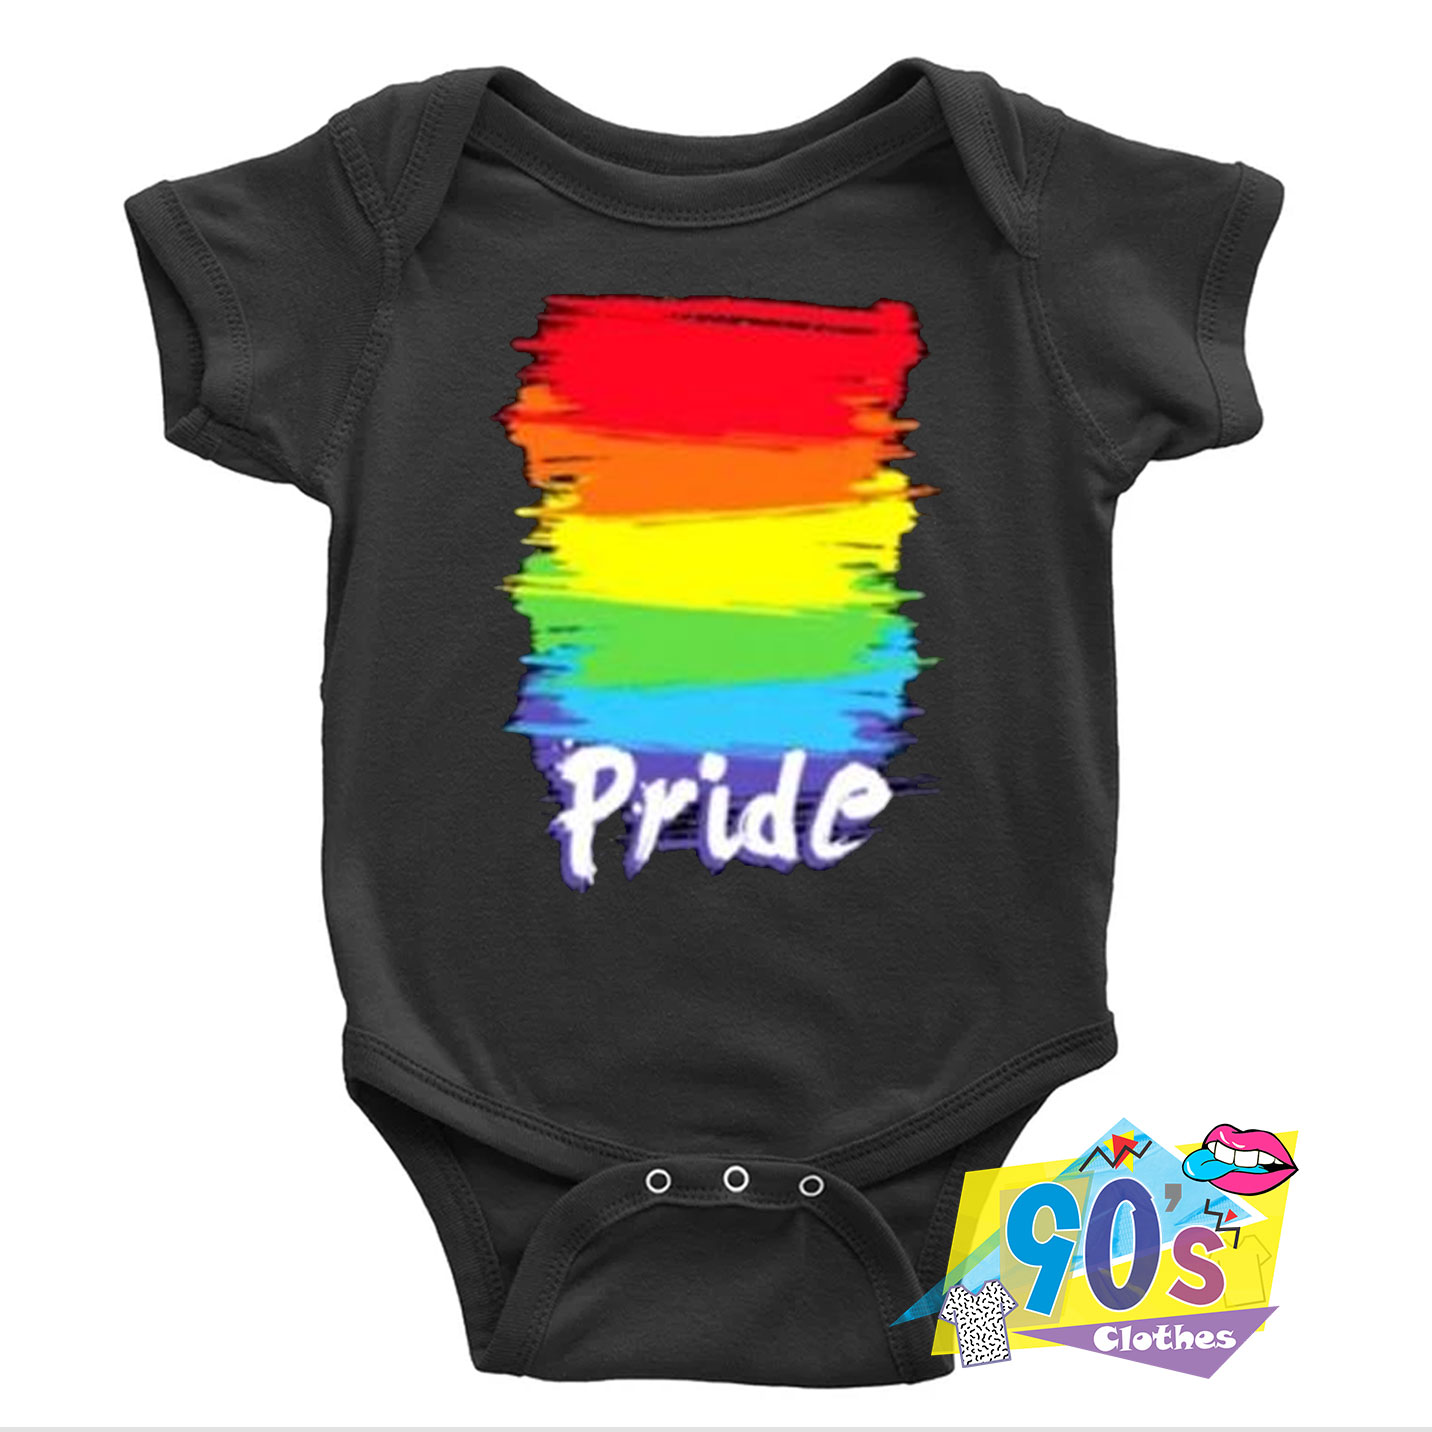 Pride Rainbow Baby Onesie, Baby Clothes - 90sclothes.com